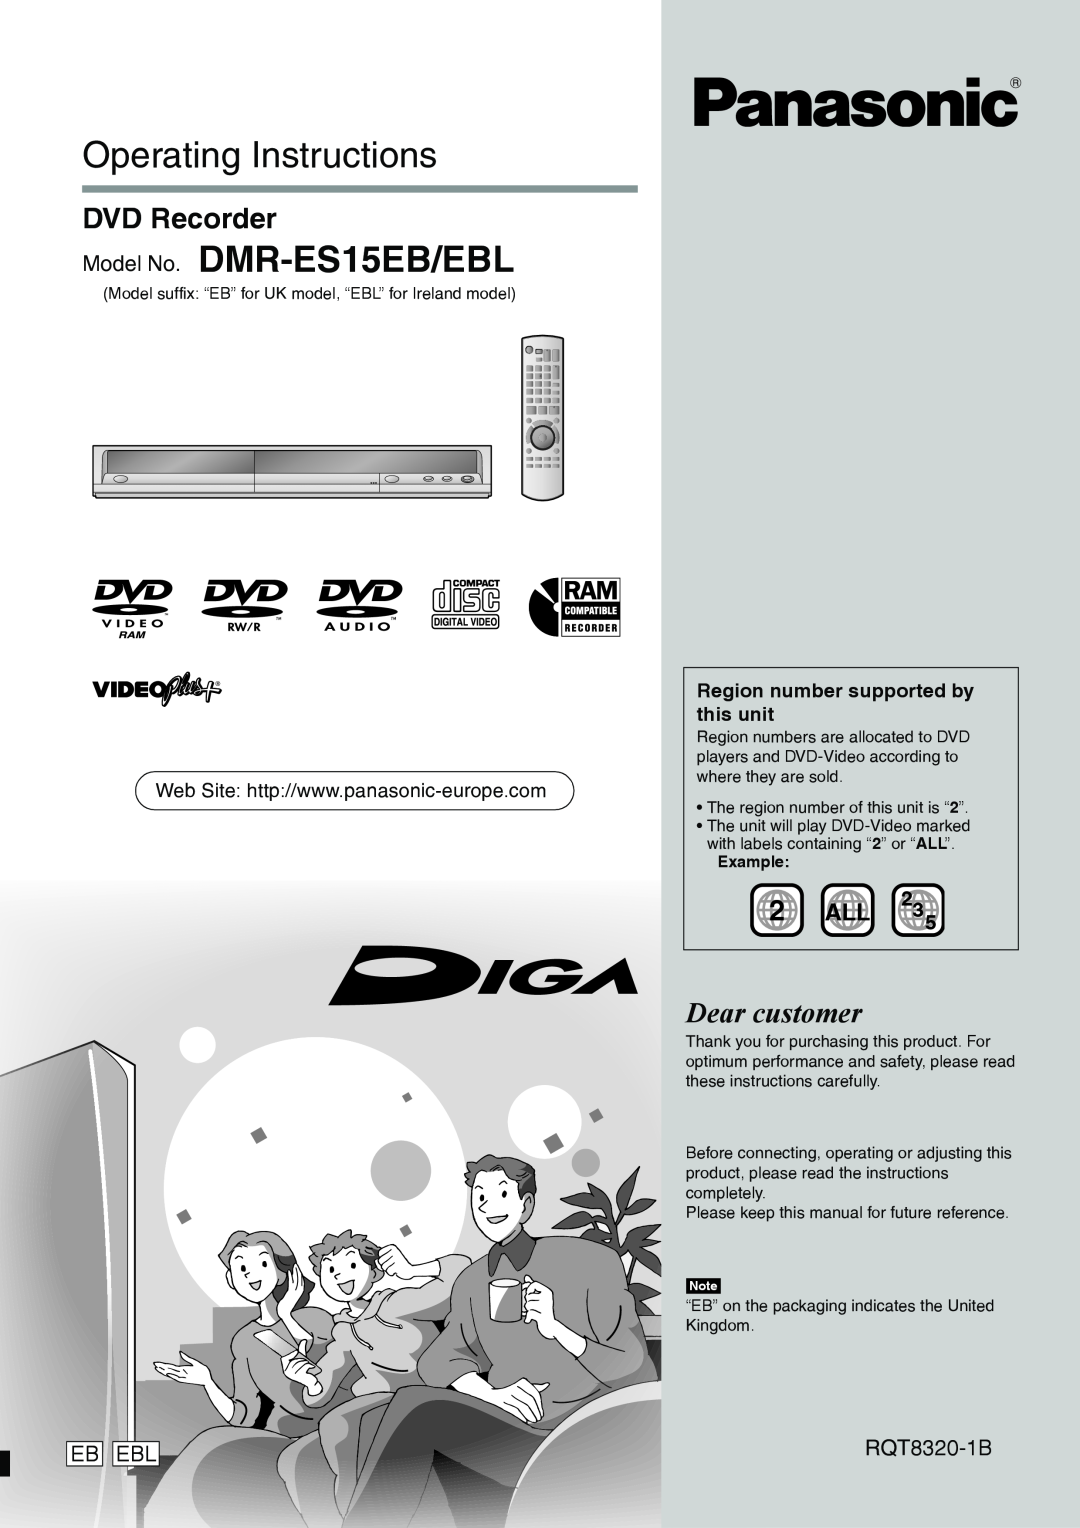 Panasonic manual DVD Recorder, RQT8320-1B, this unit, Operating Instructions, Model No. DMR-ES15EB/EBL, Dear customer 